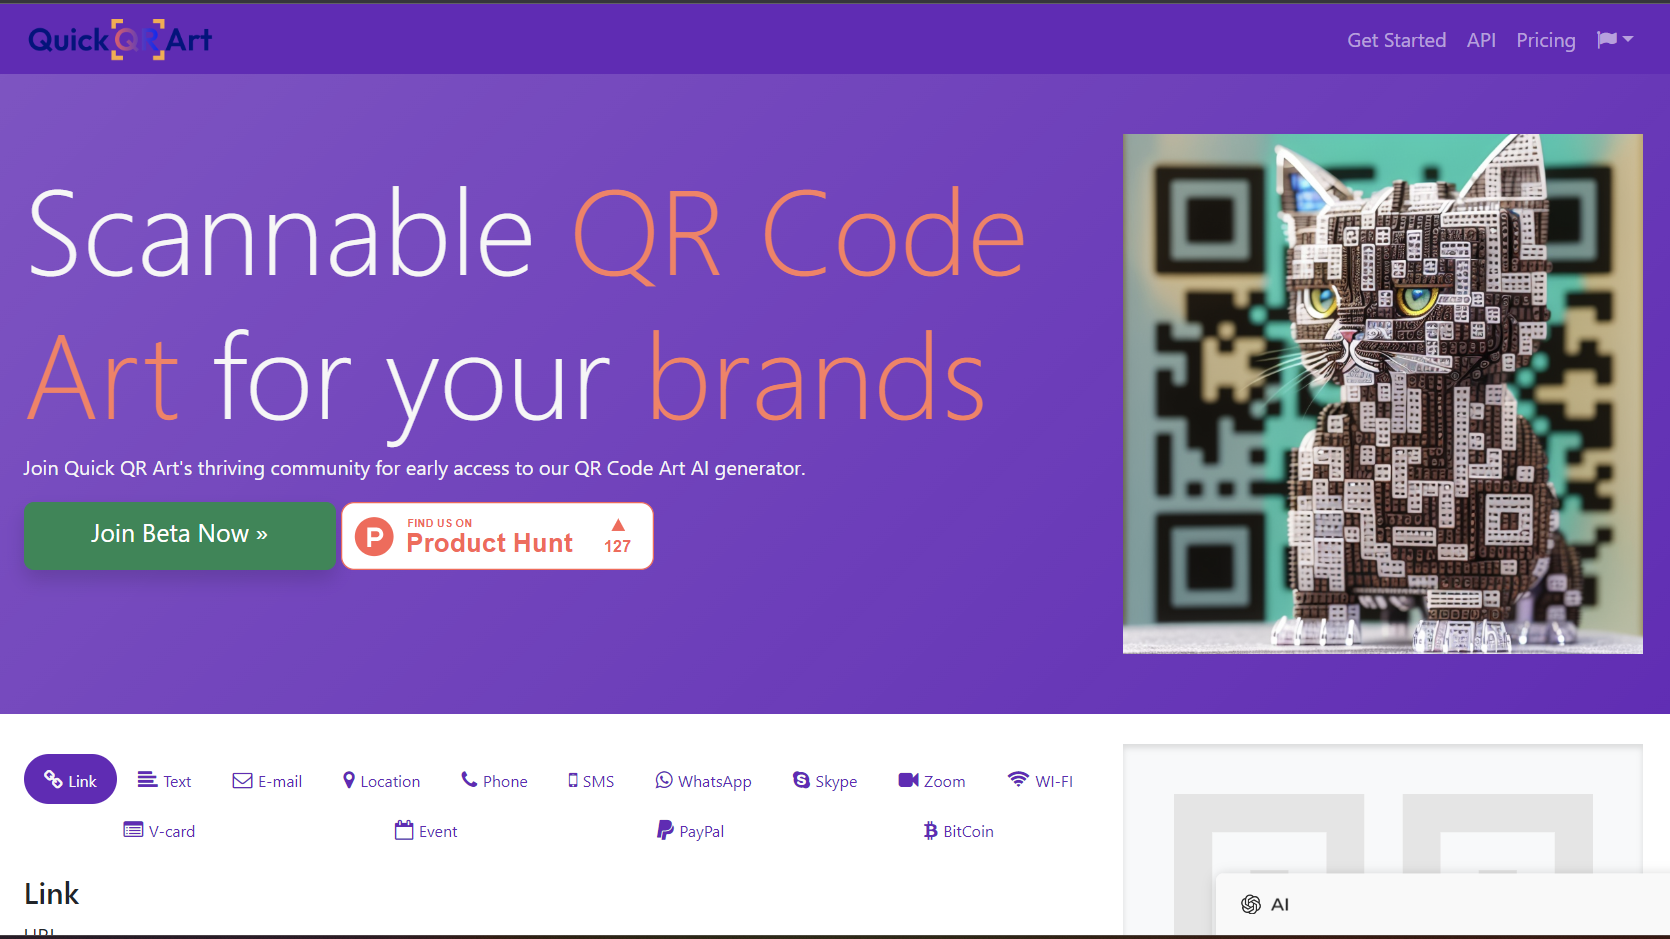 Quick QR Art - Scannable QR Code Art for your brands